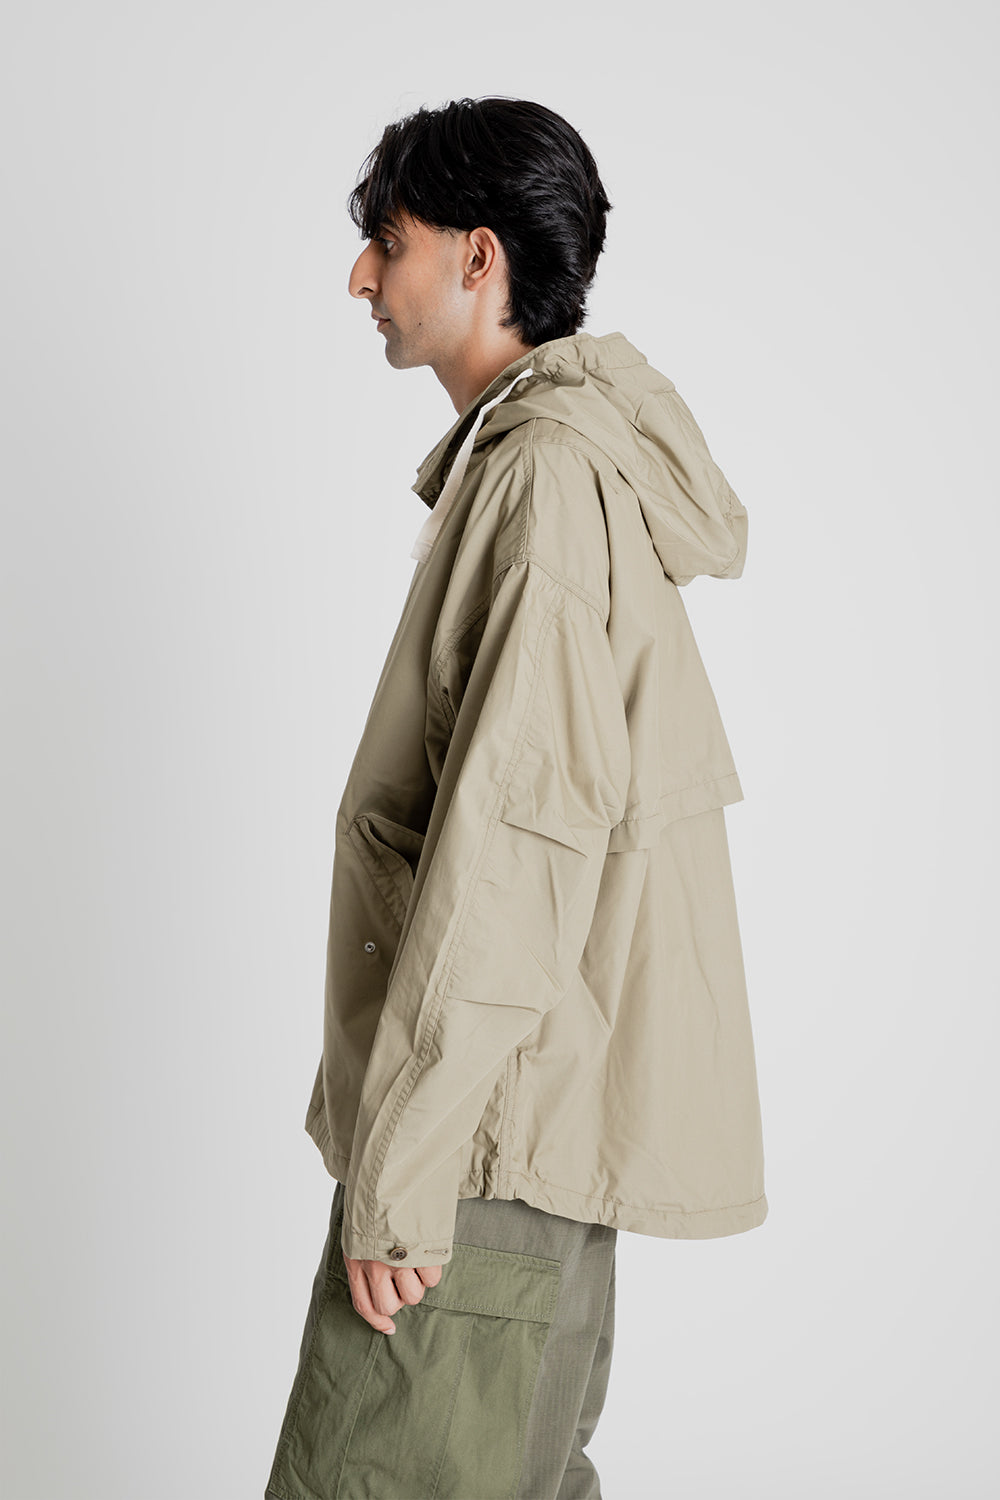 Nanamica Hooded Jacket in Khaki